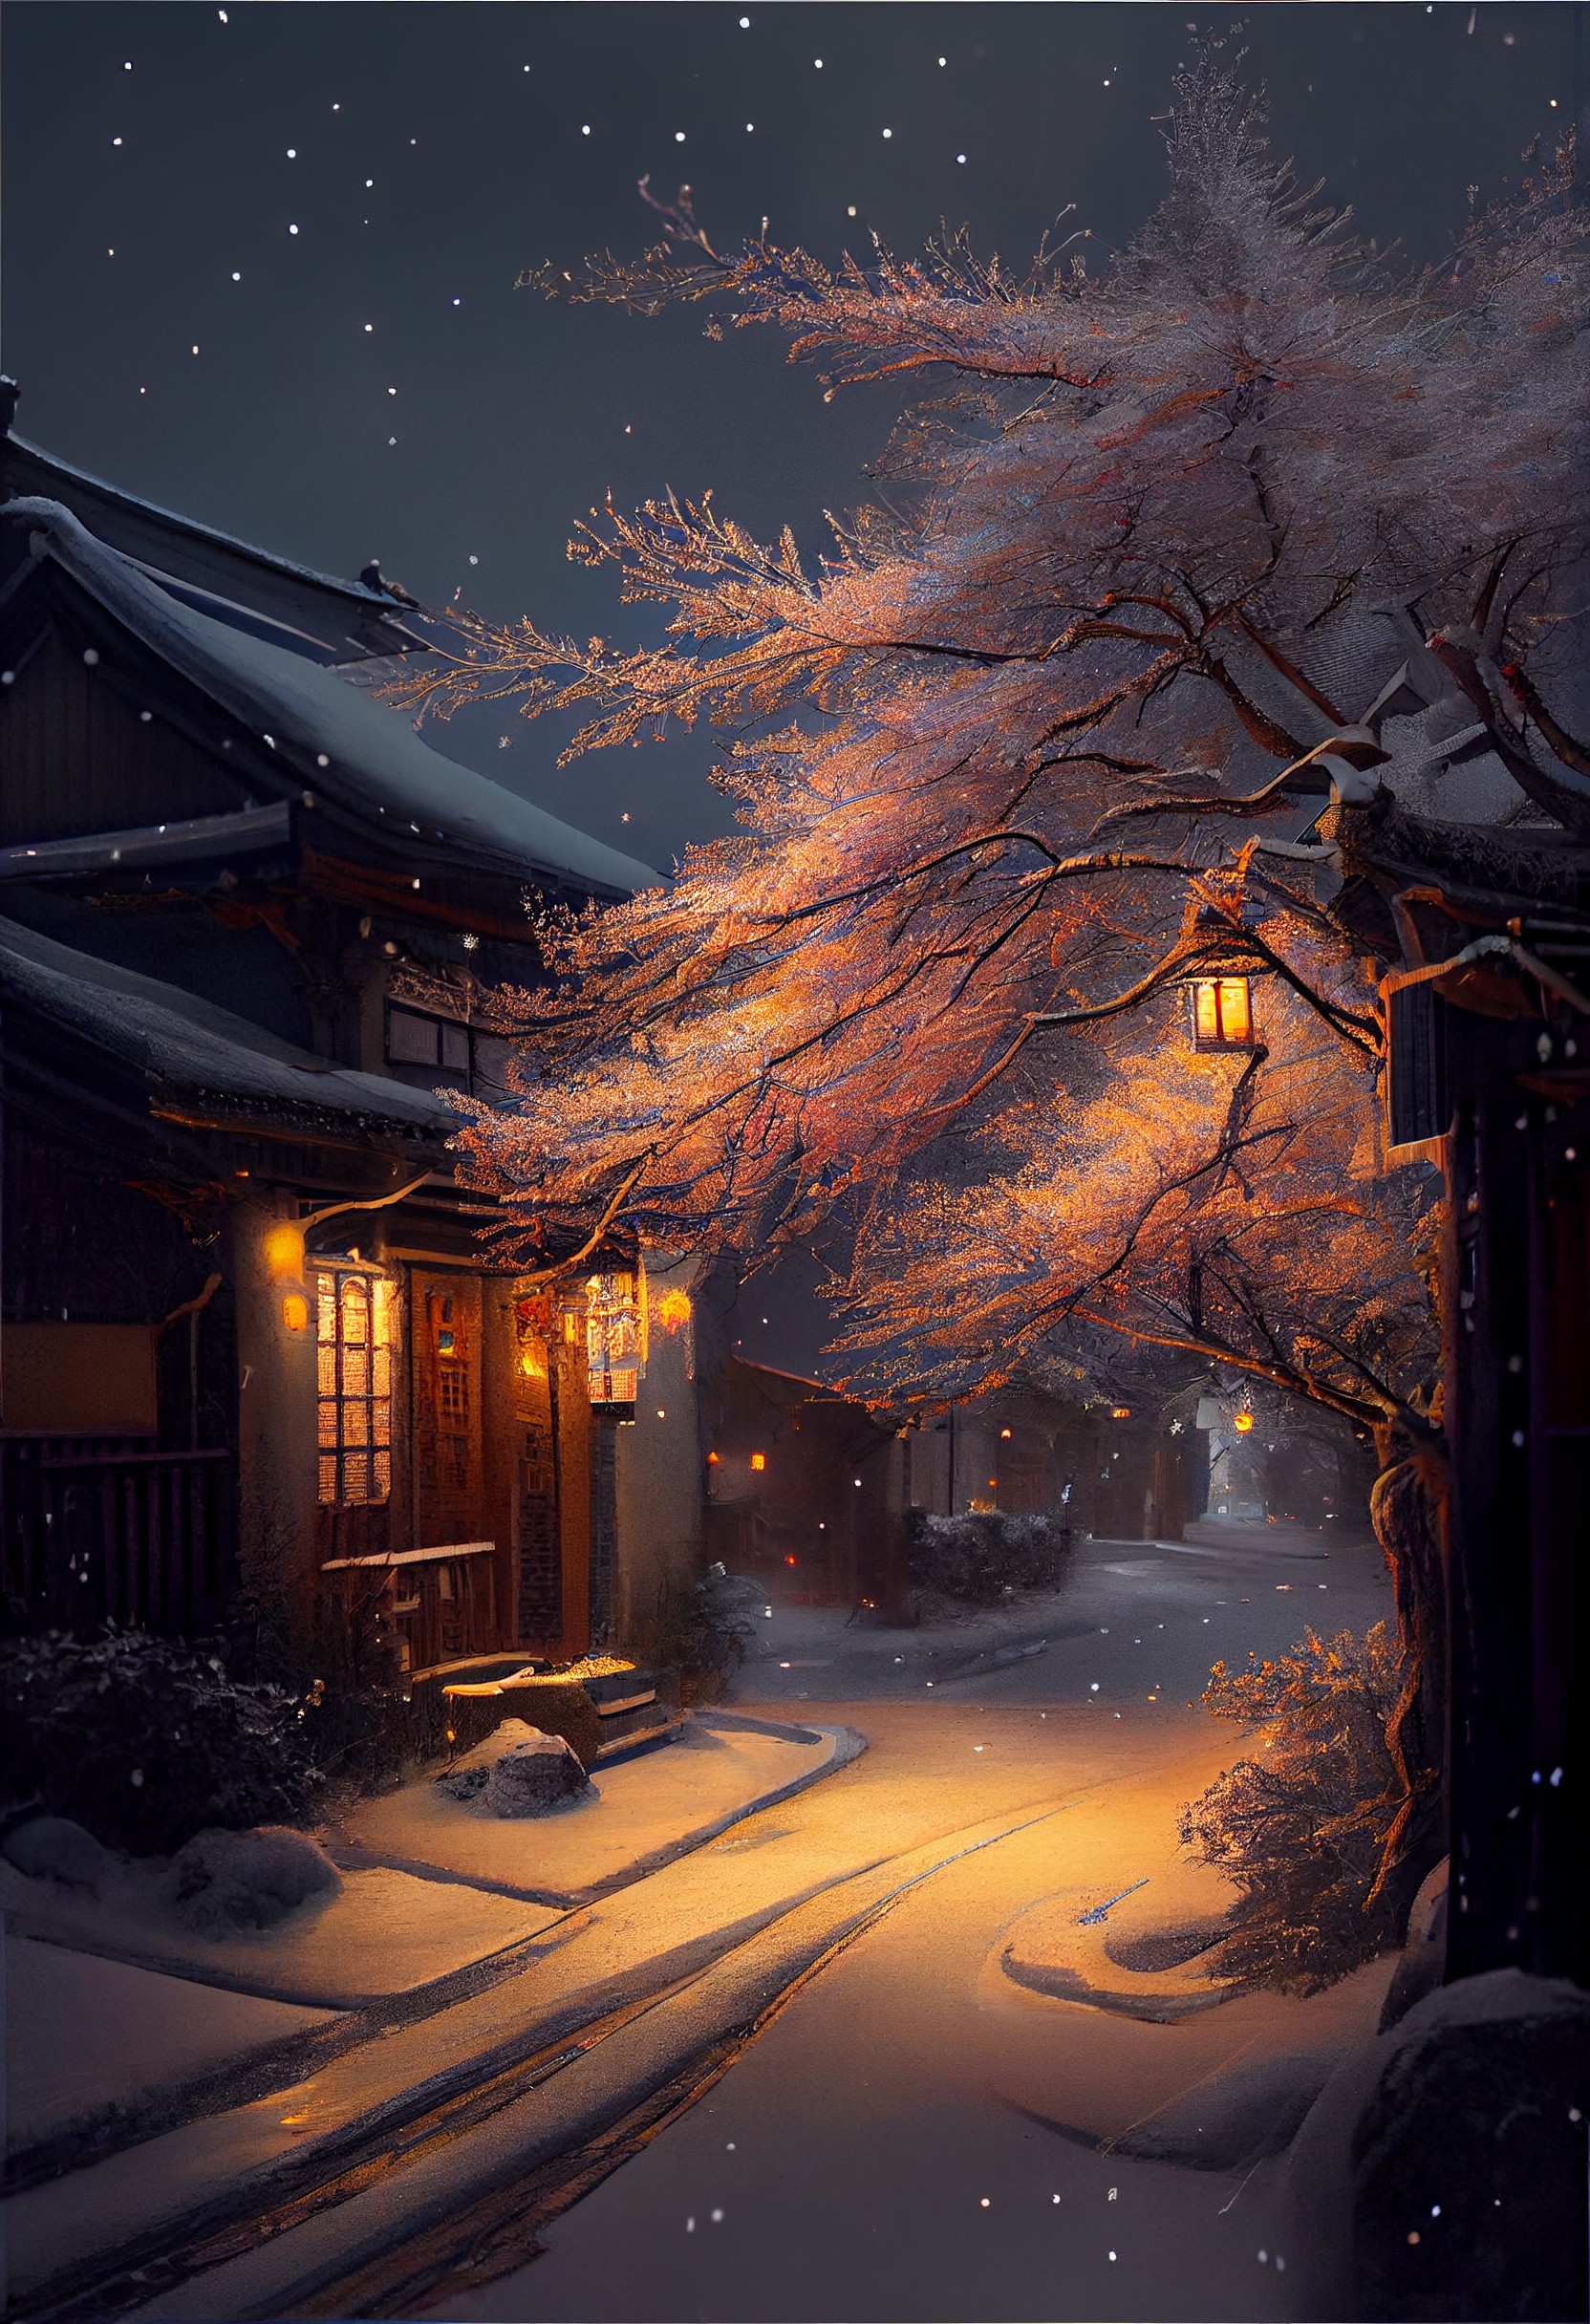 Plum Blossom Village Road on a Snowy Night